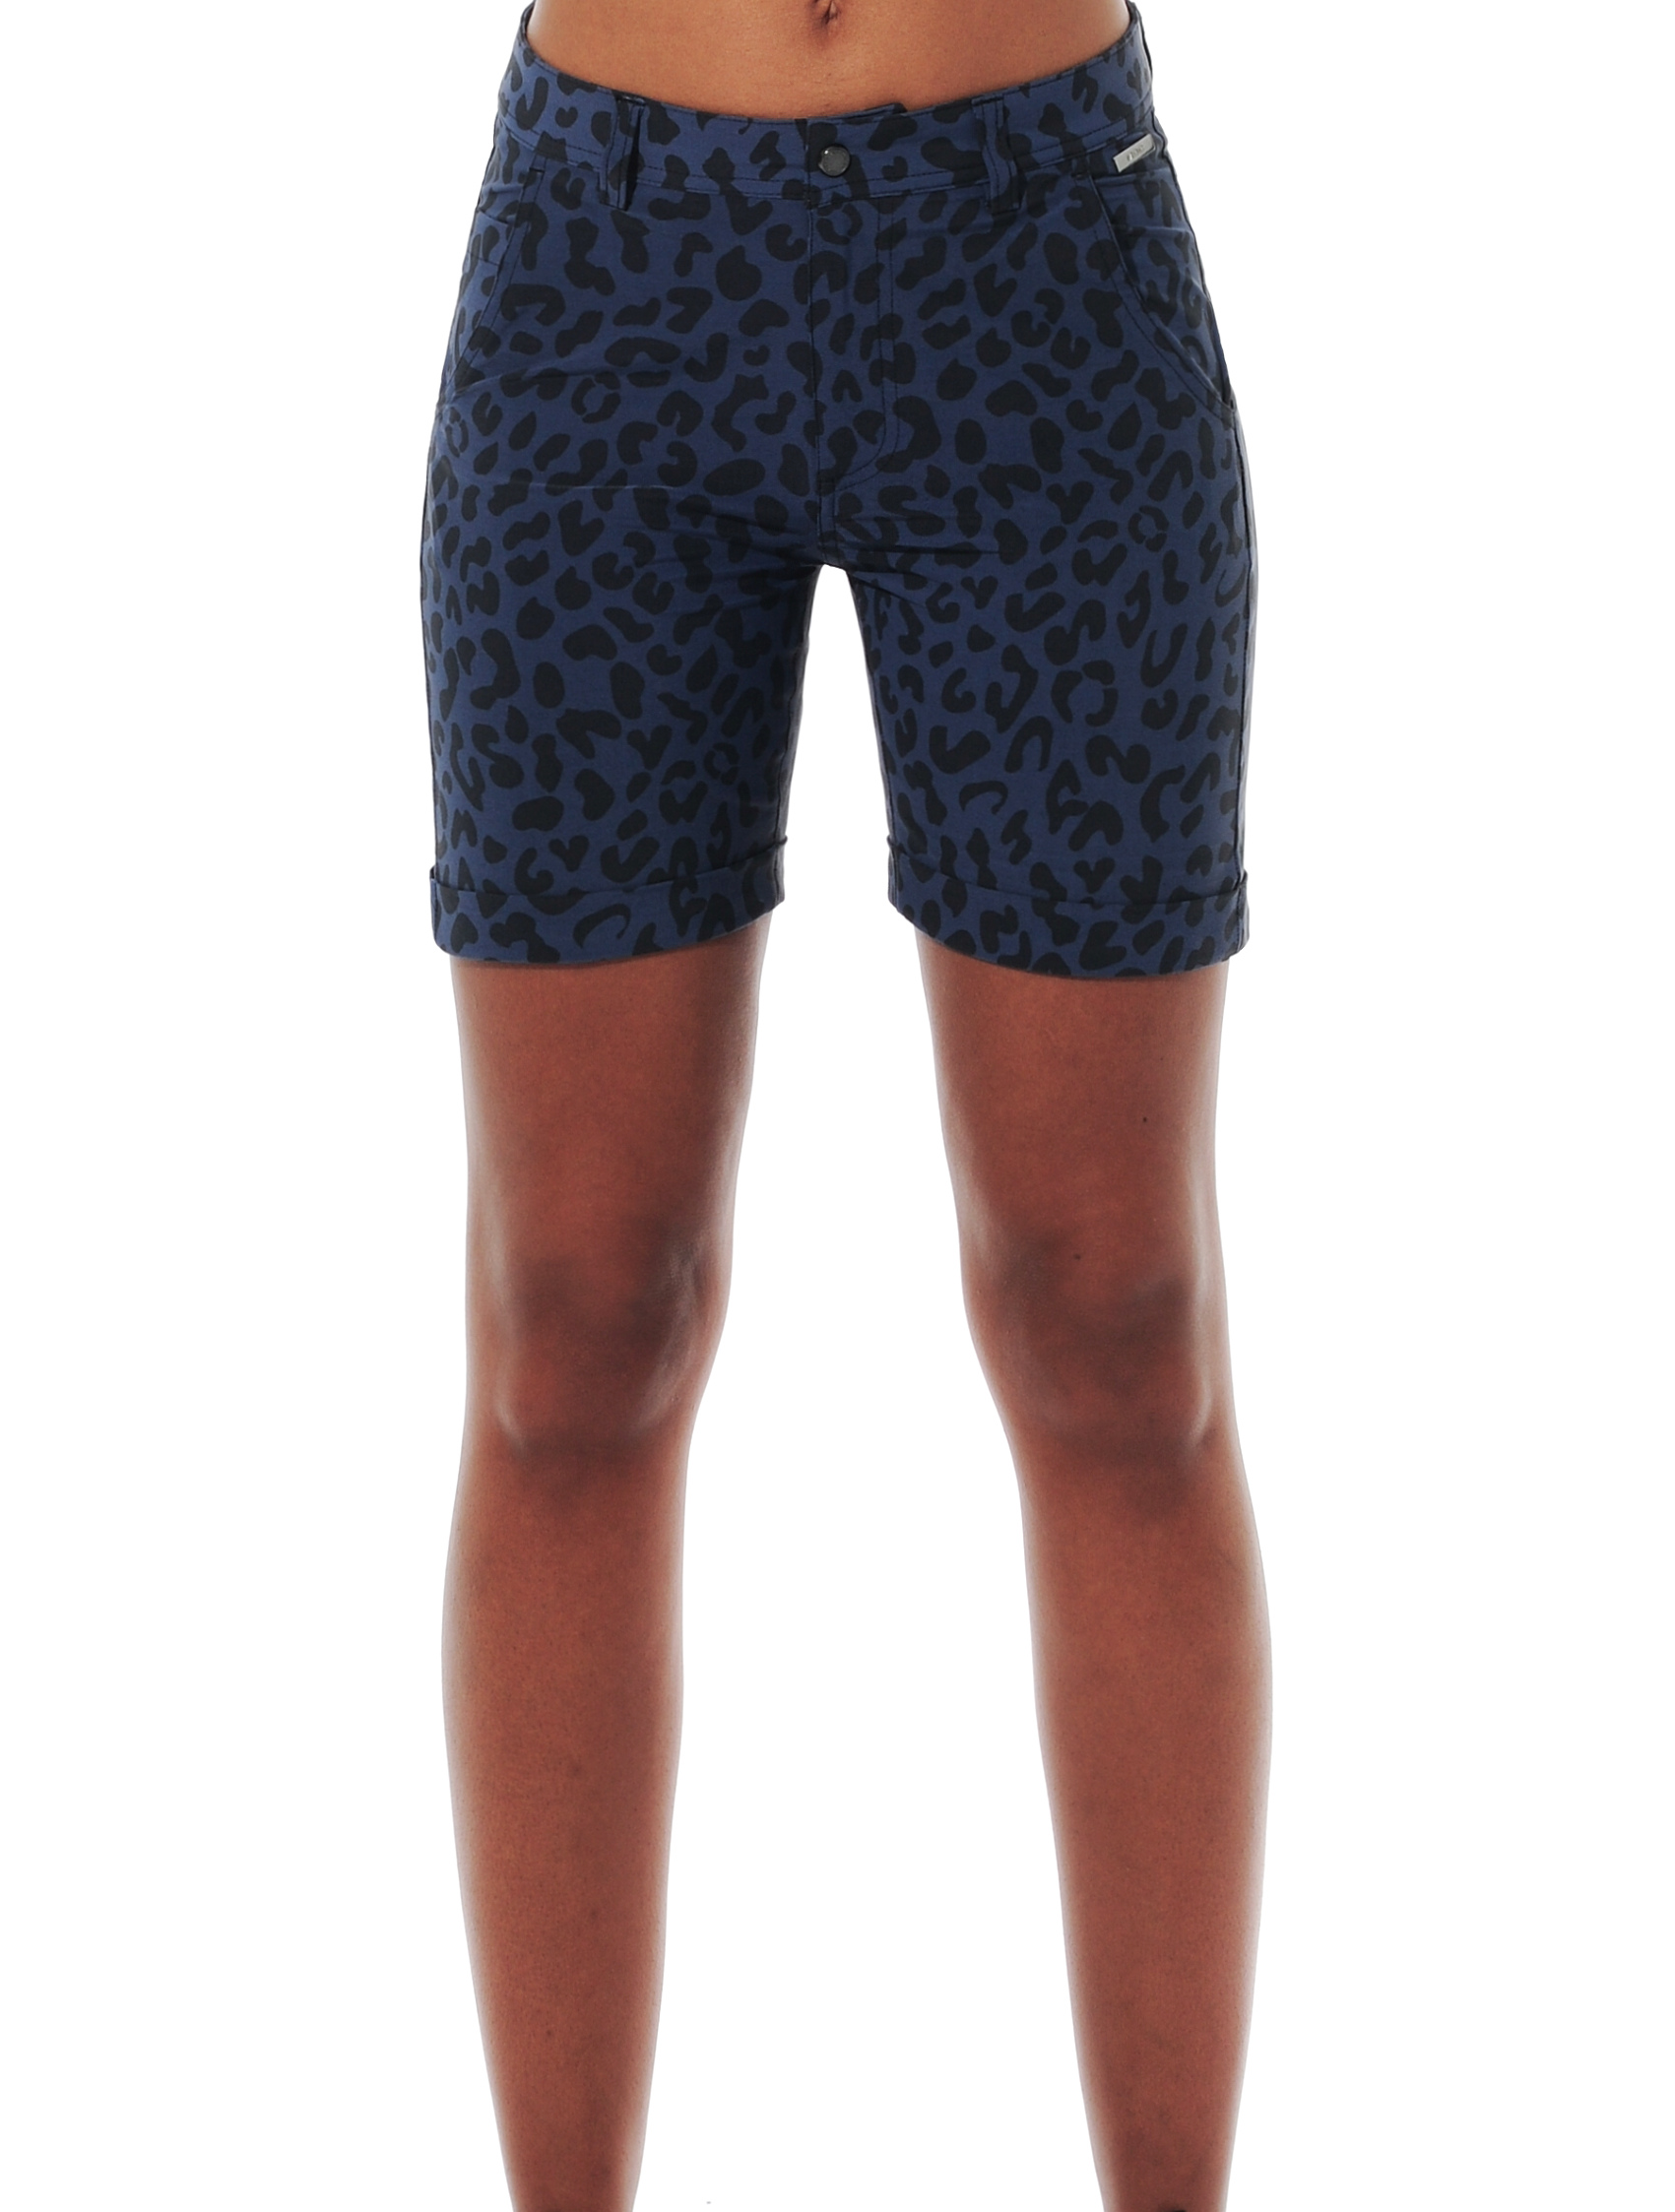 Jaguar print shorts navy/black 